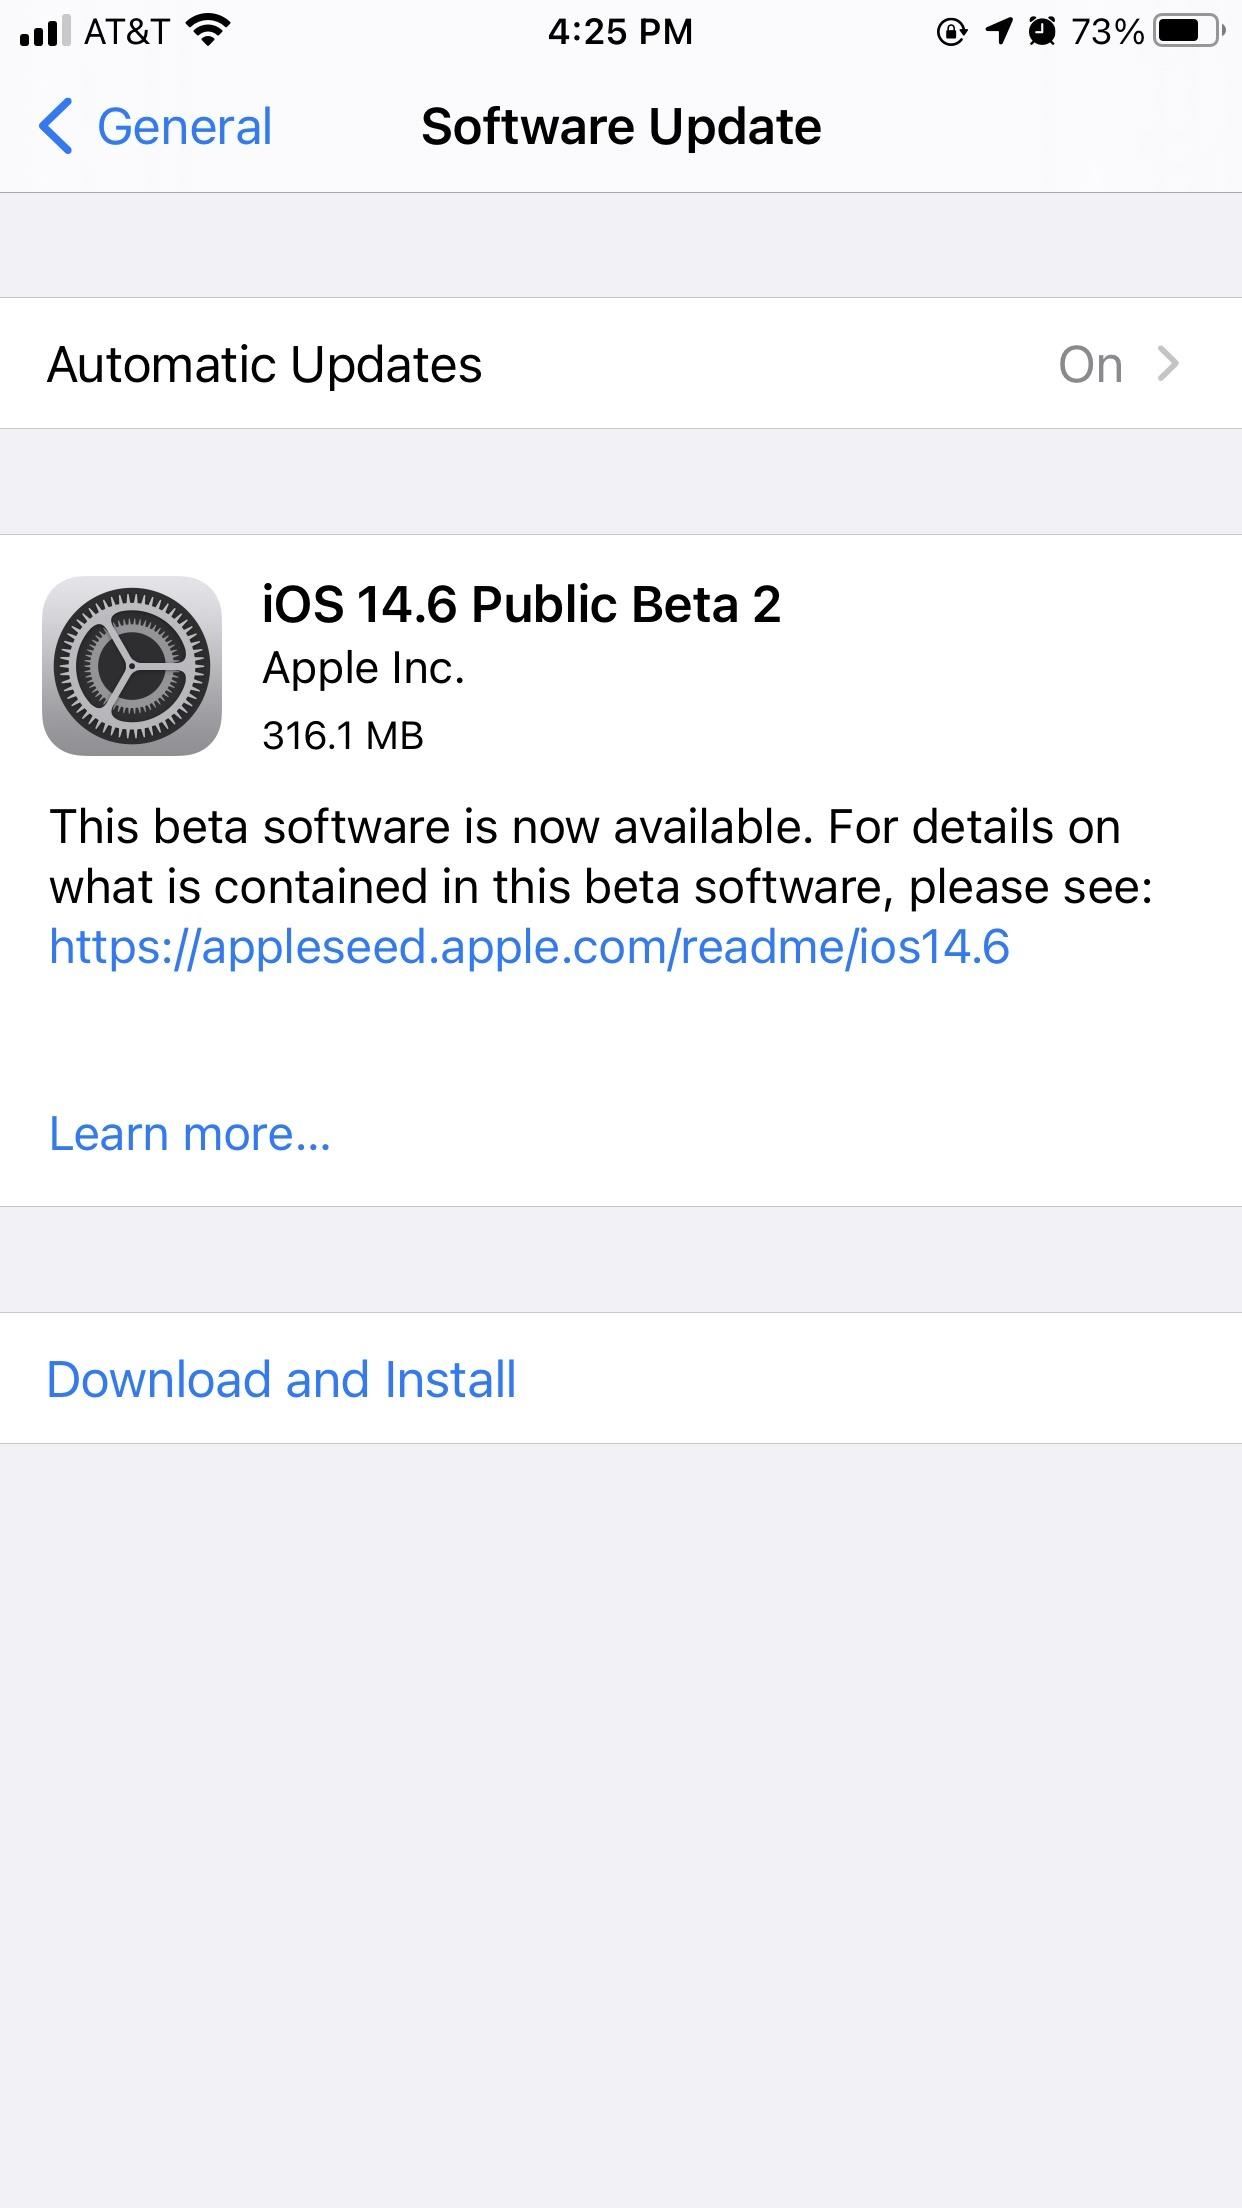 Apple Releases iOS 14.6 Public Beta 2 for iPhone